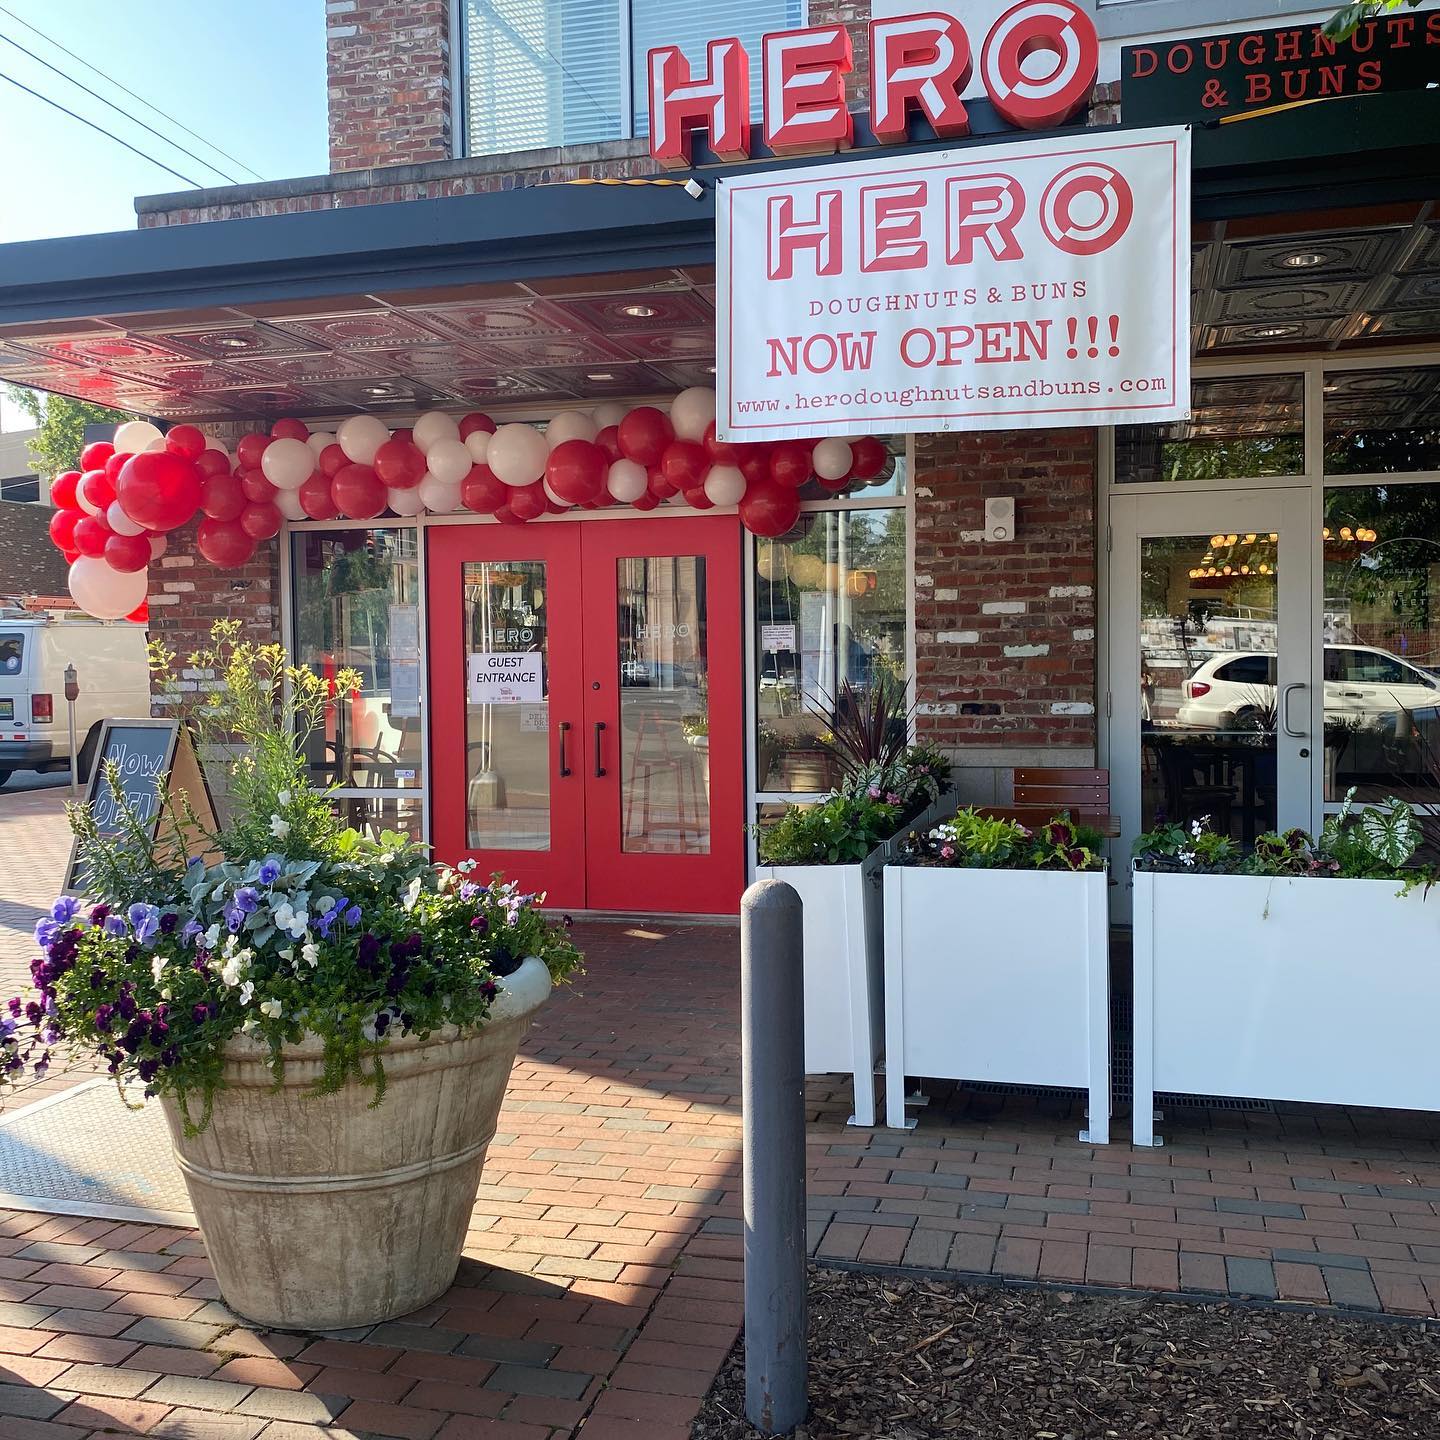 hero 7 Birmingham restaurants opening for in house + patio dining this week